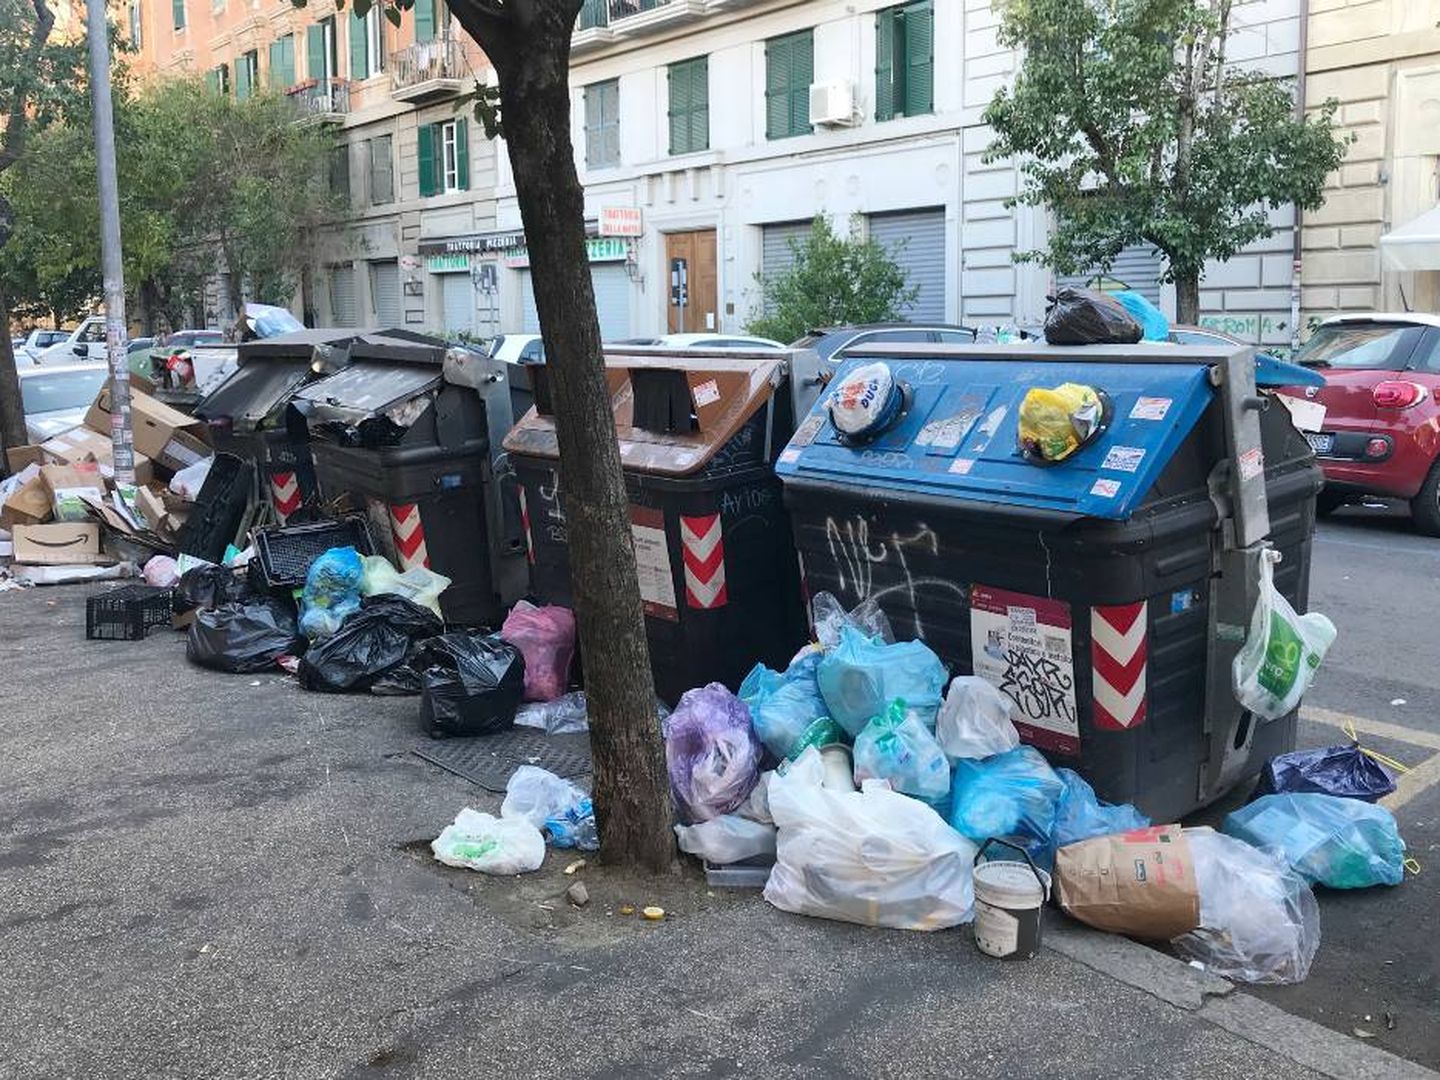 Algunas calles de Roma, inundadas de basura. (J. B.)